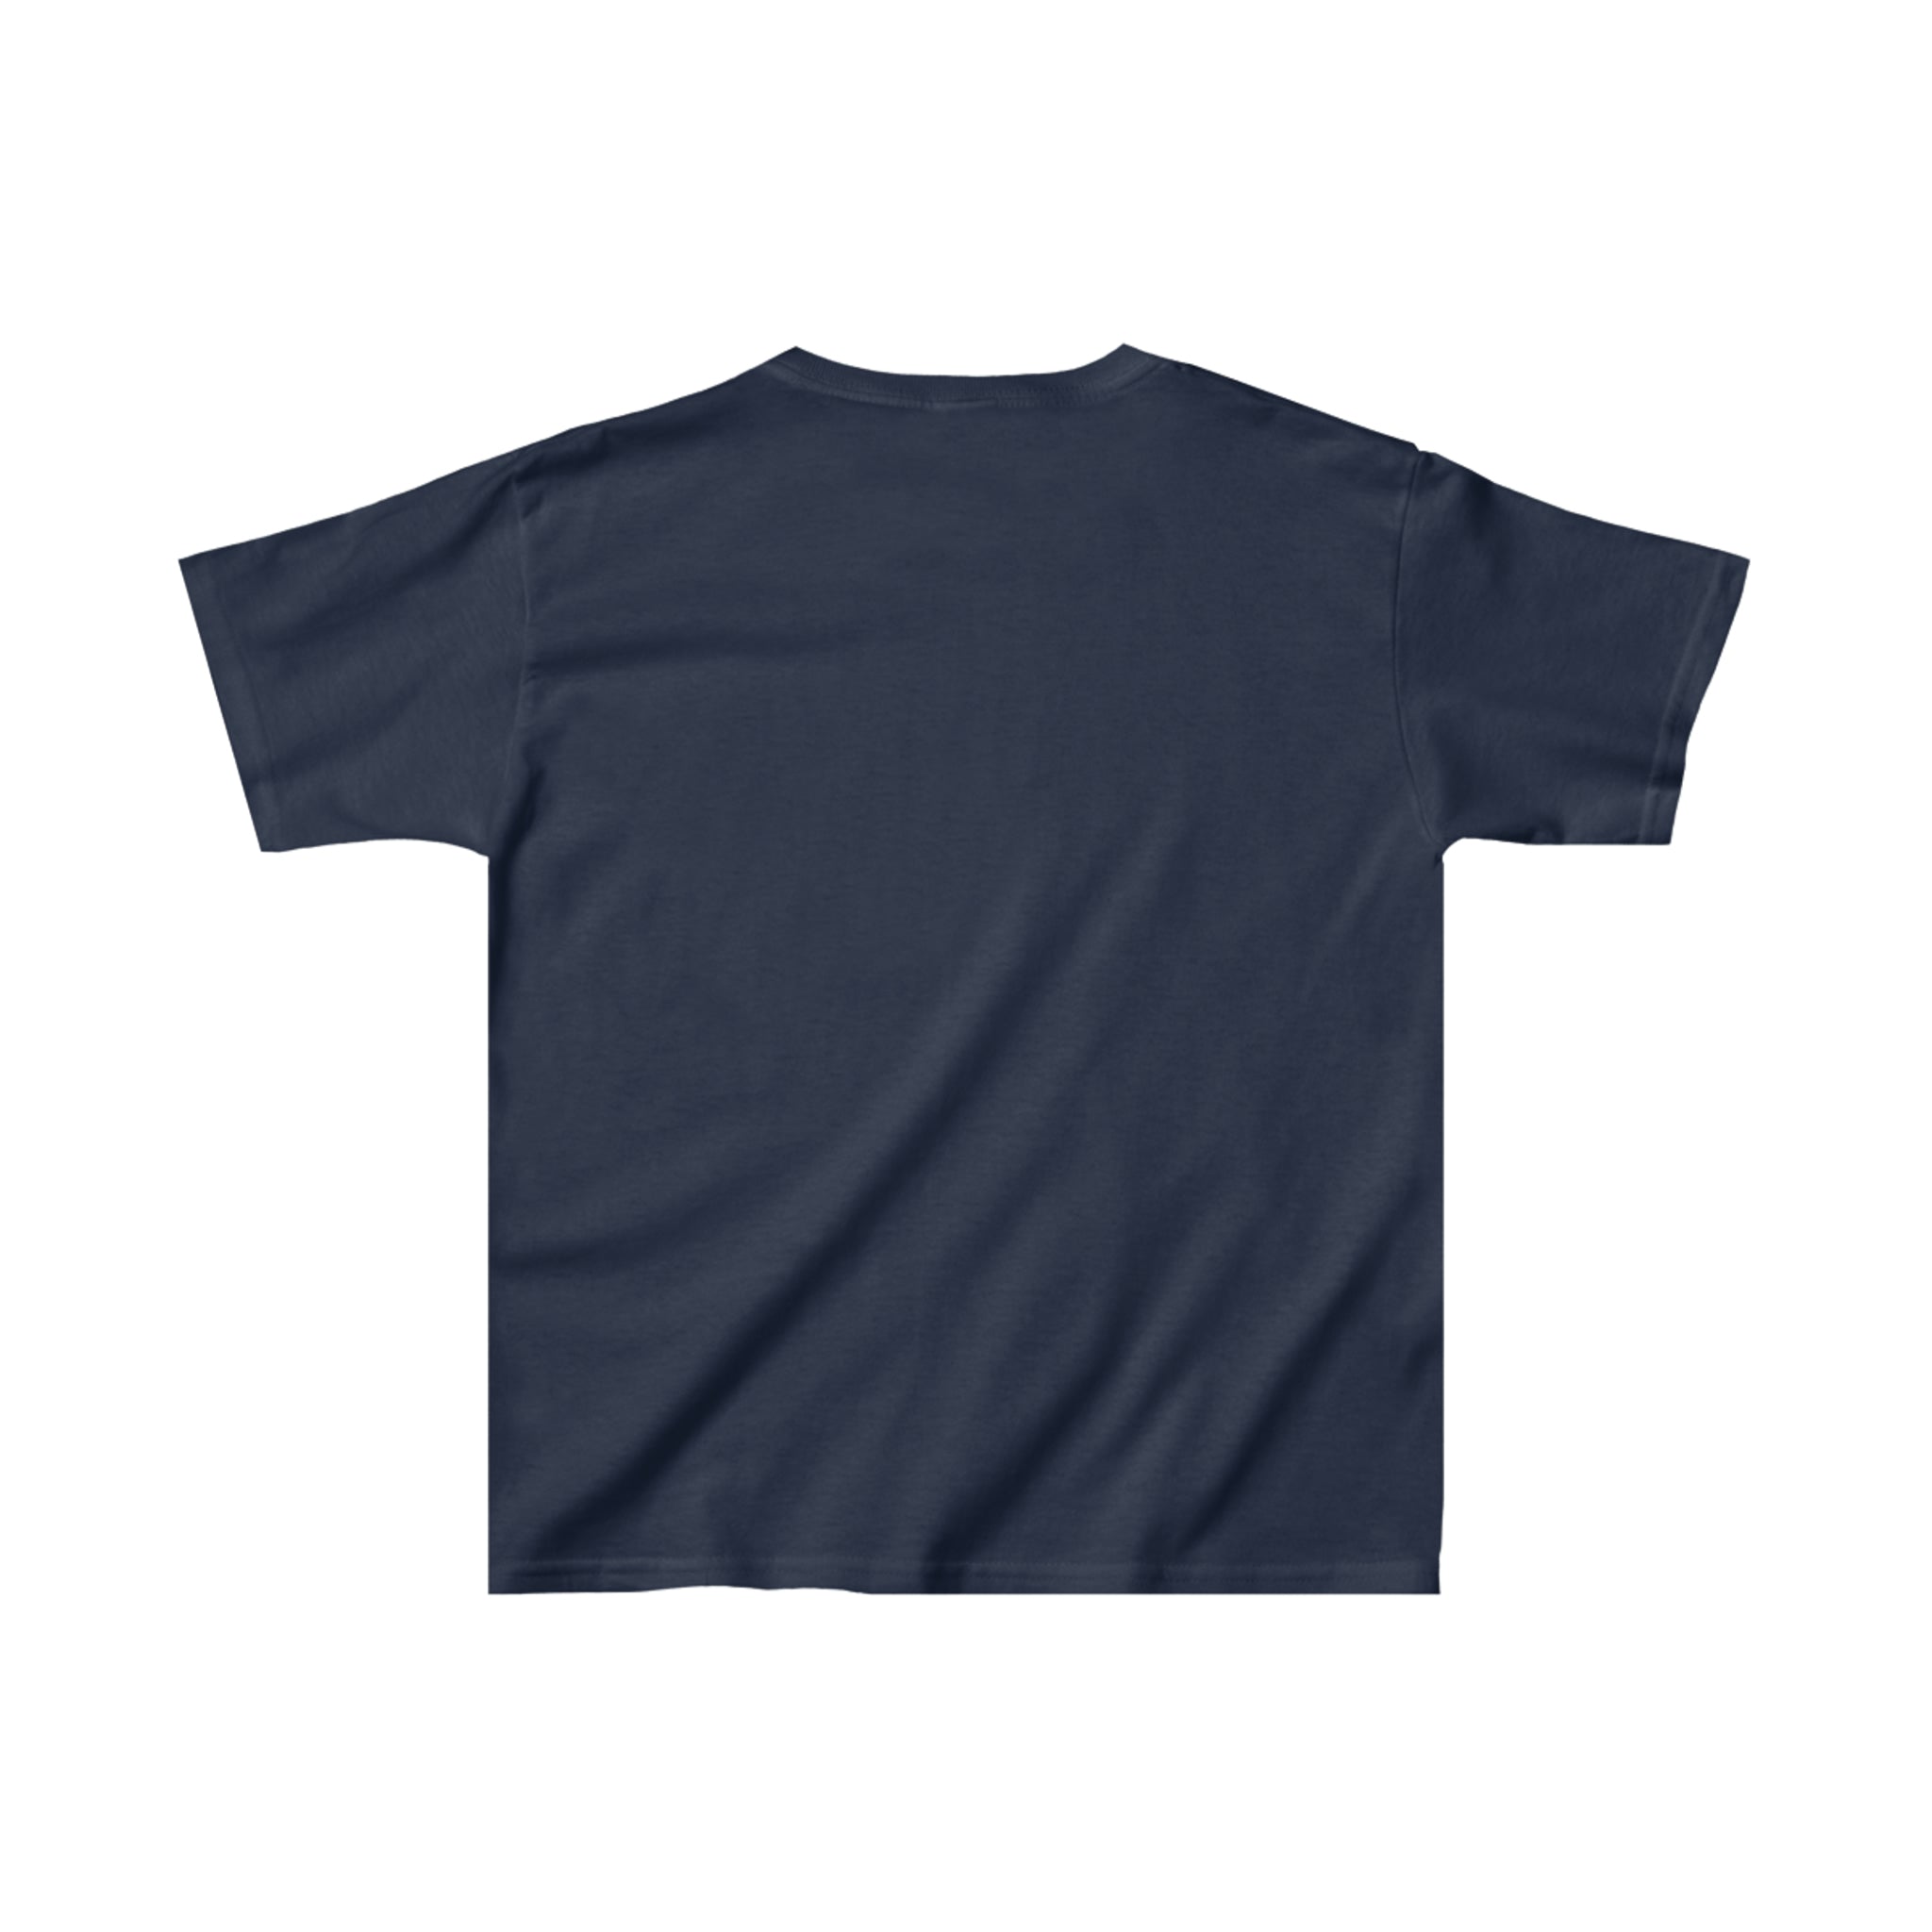 Minnesota Fighting Saints T-Shirt (Youth)